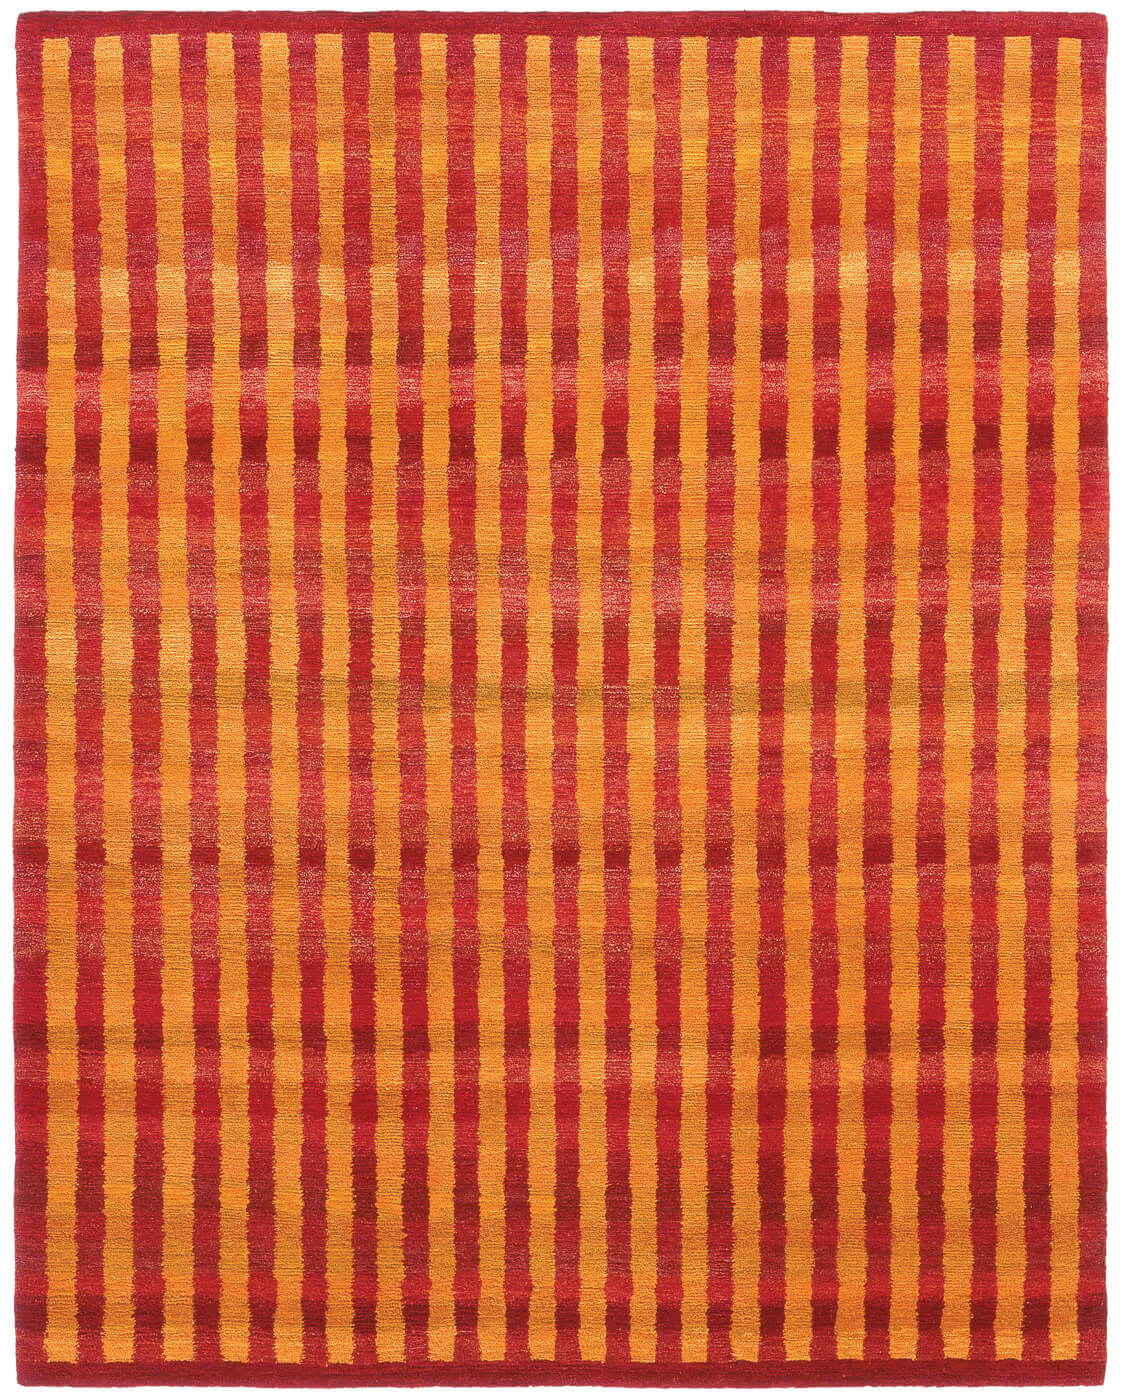 Ковер Gama Vertical Stripes оранжевый от элитного бренда Jan Kath